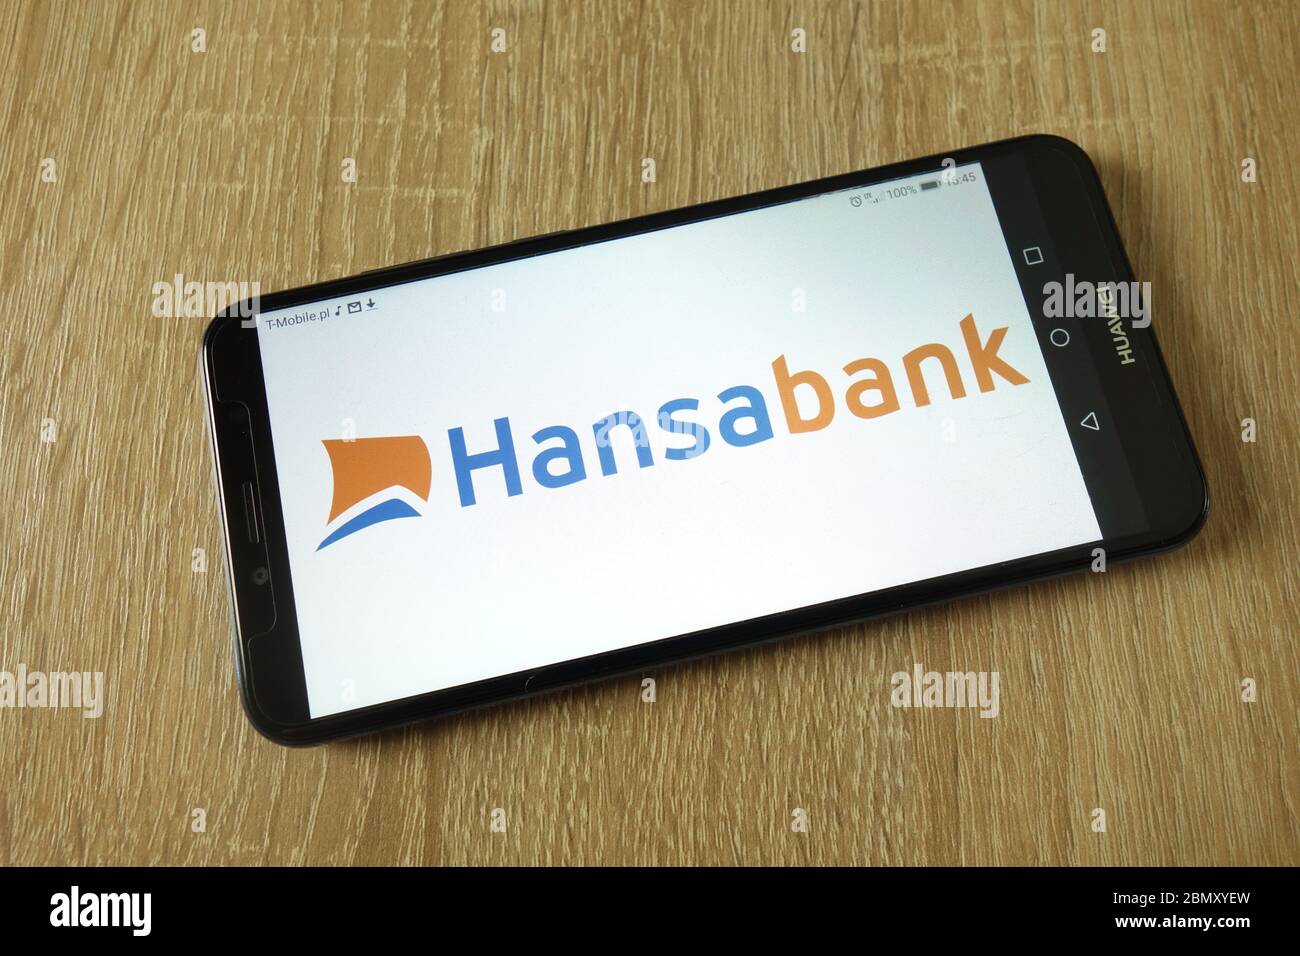 Hansabank logo displayed on smartphone Stock Photo